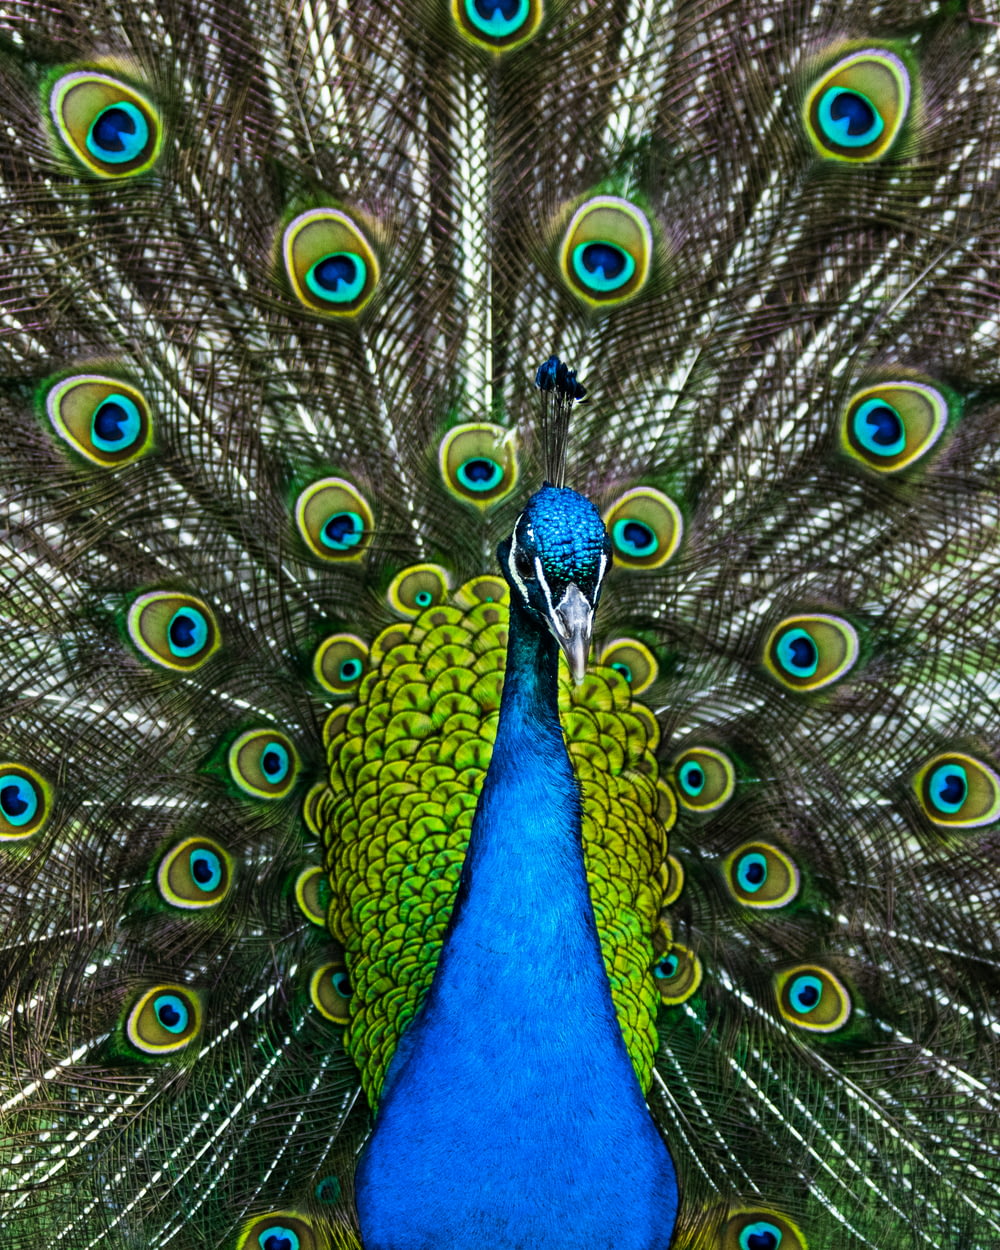 yellow peacock close-up photo